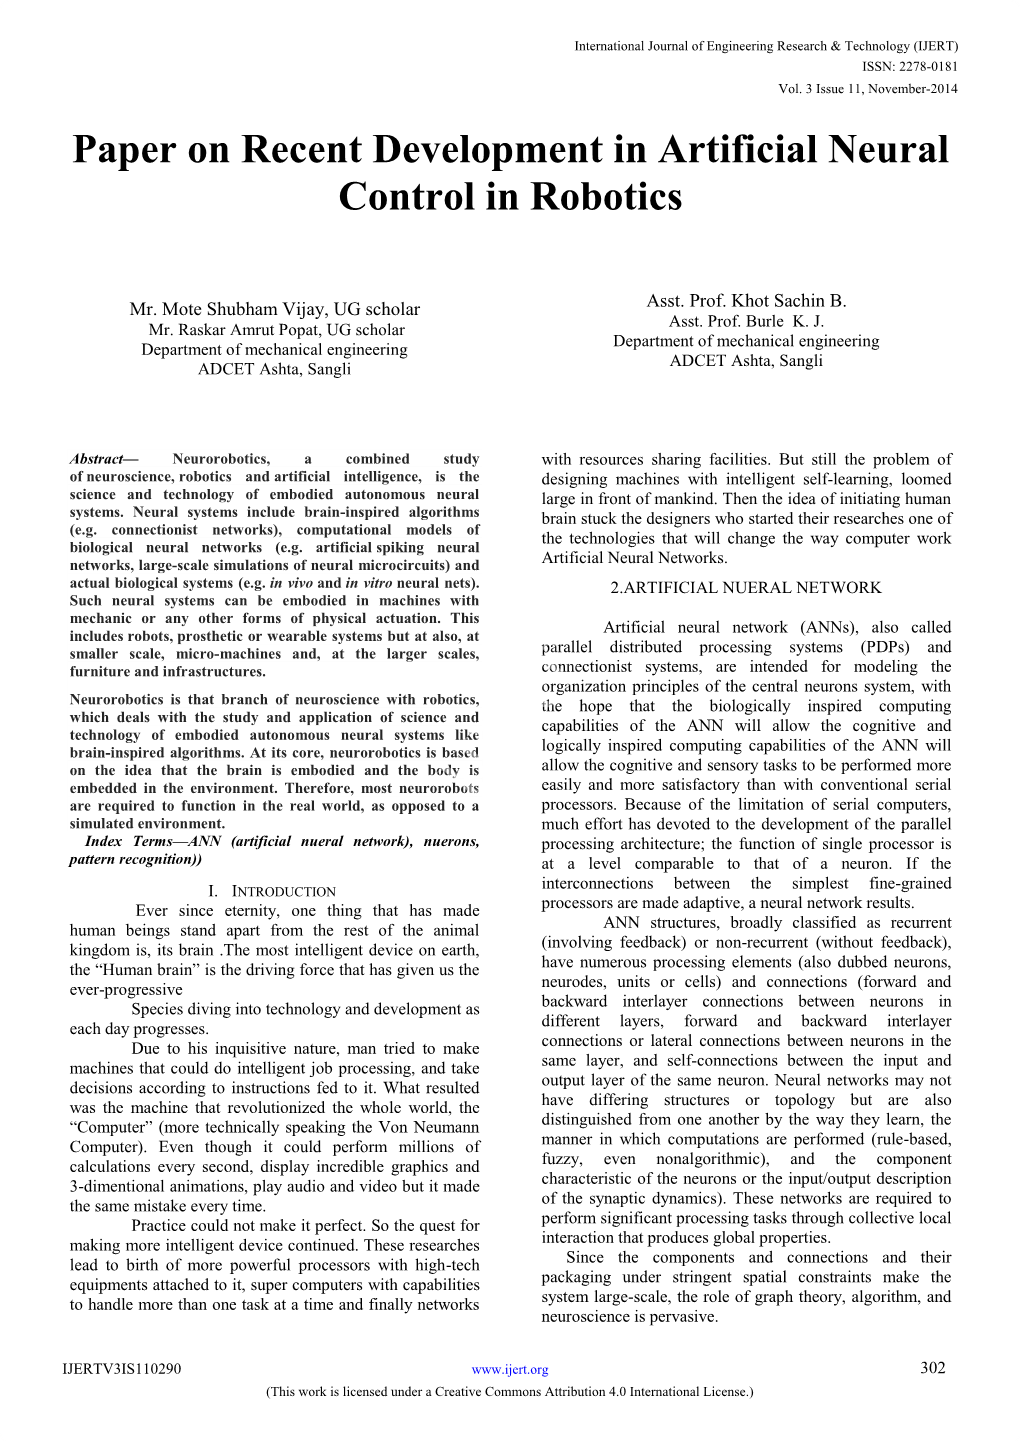 Paper on Recent Development in Artificial Neural Control in Robotics